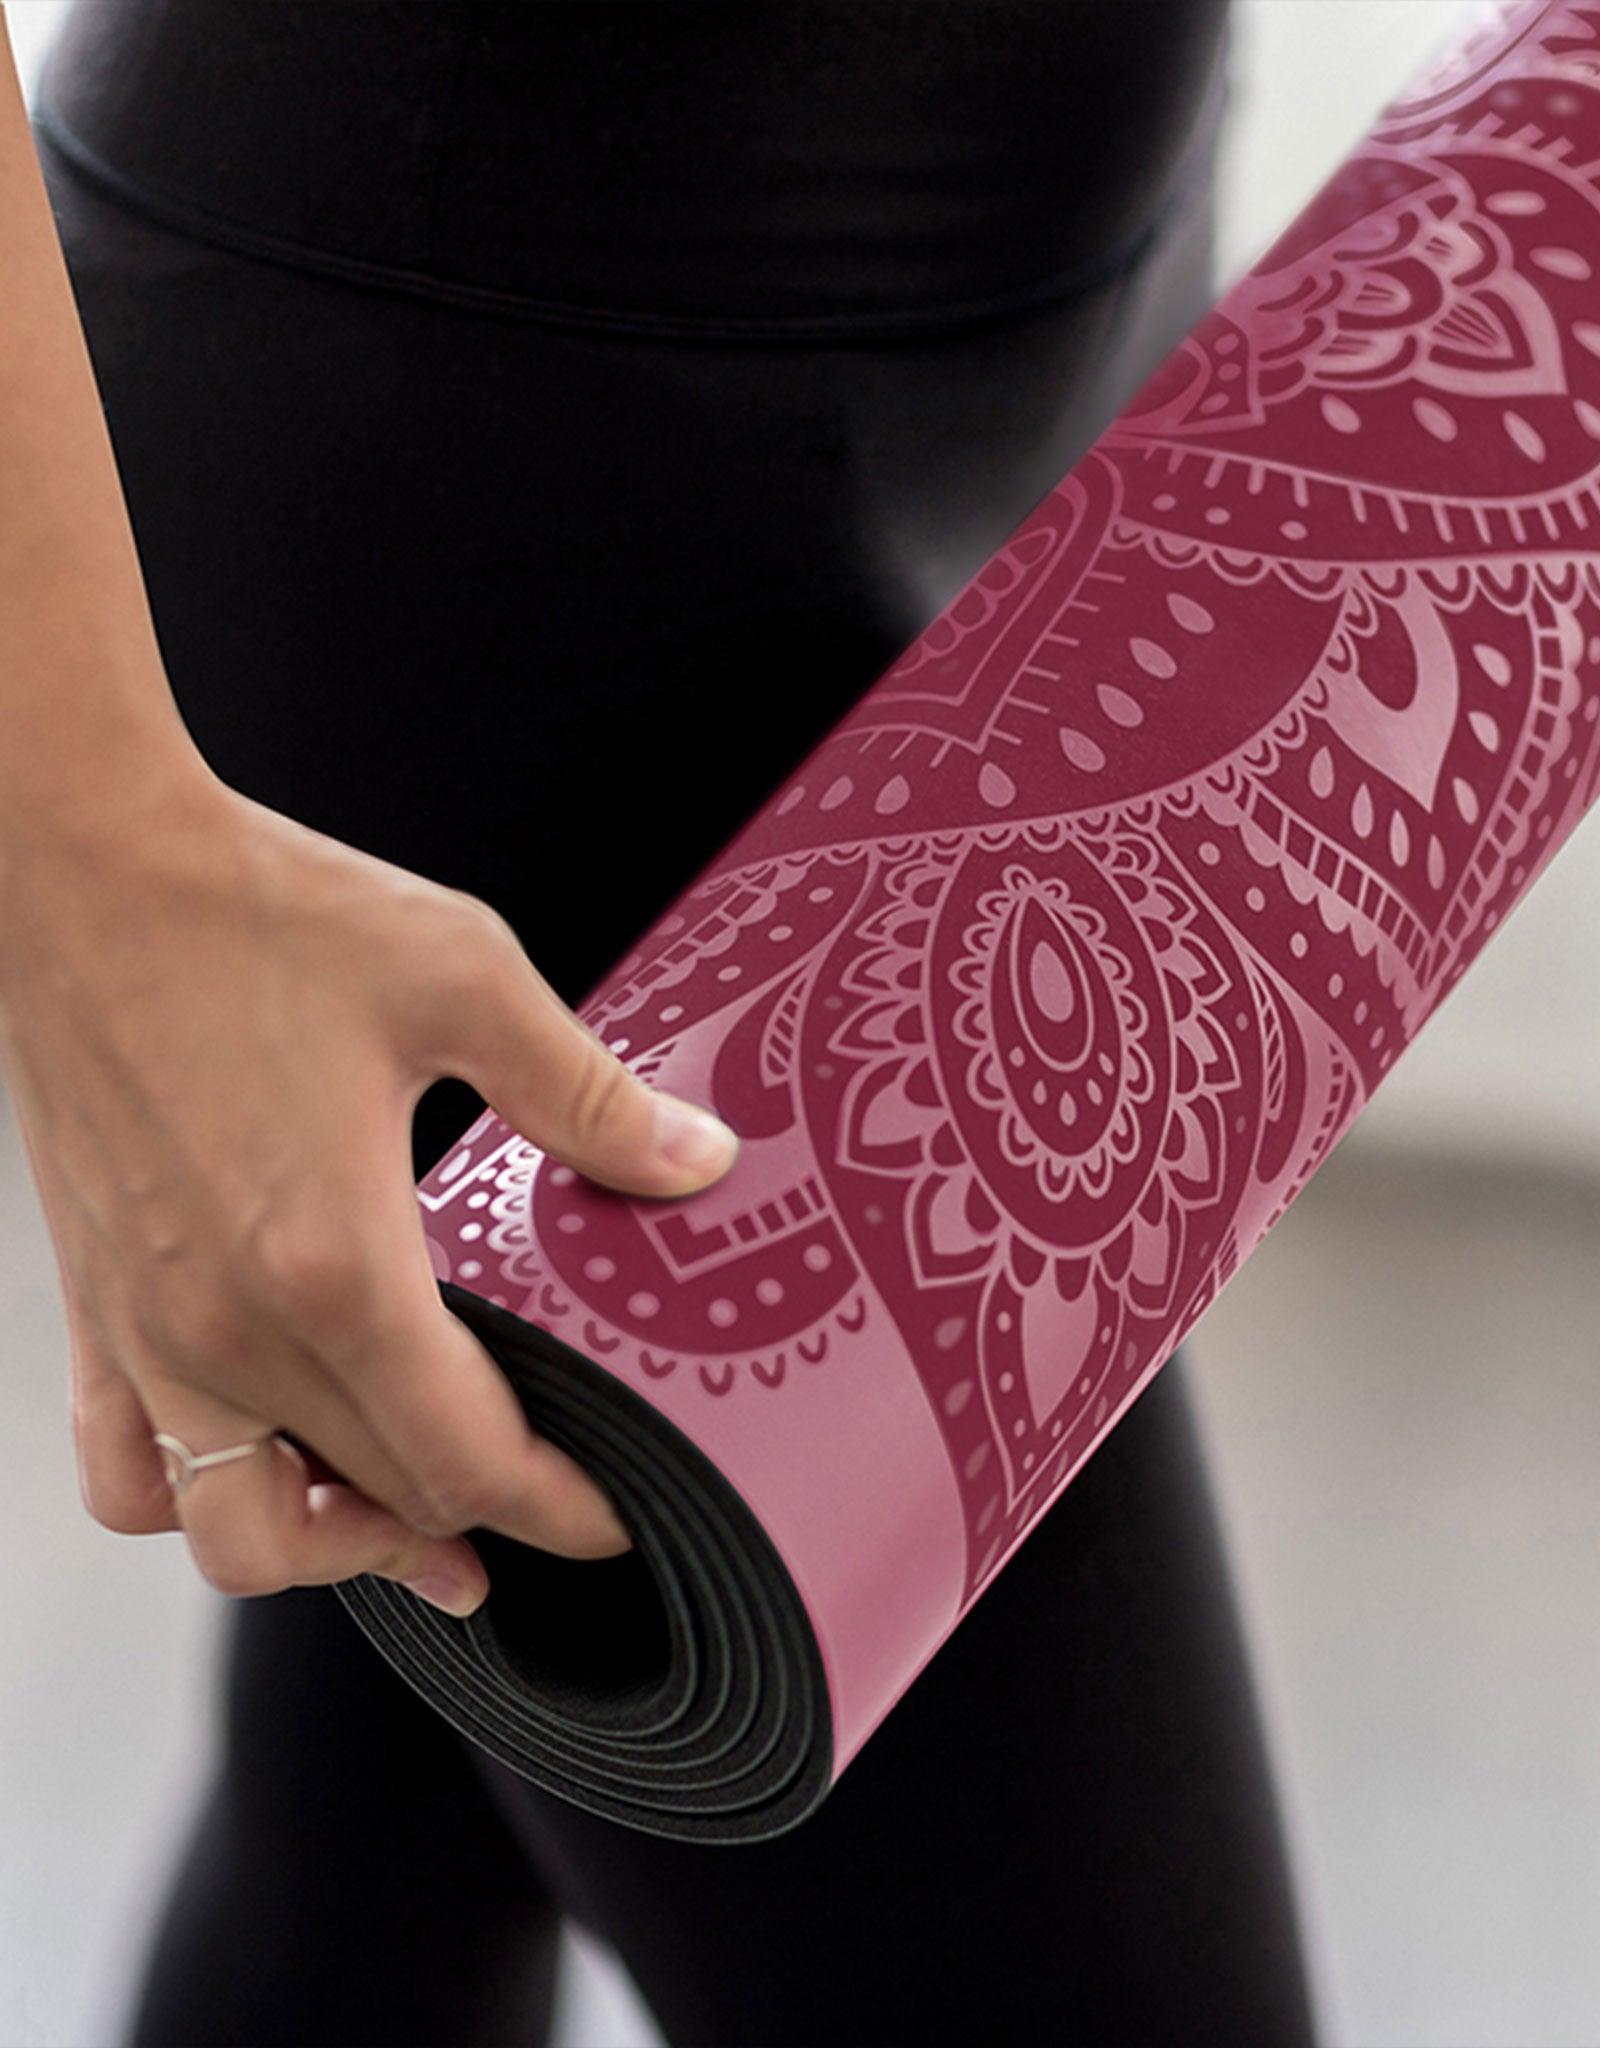 Infinity Yoga Mat - 5mm - Mandala Rose - The Best Yoga Mat provides great support - Yoga Design Lab 